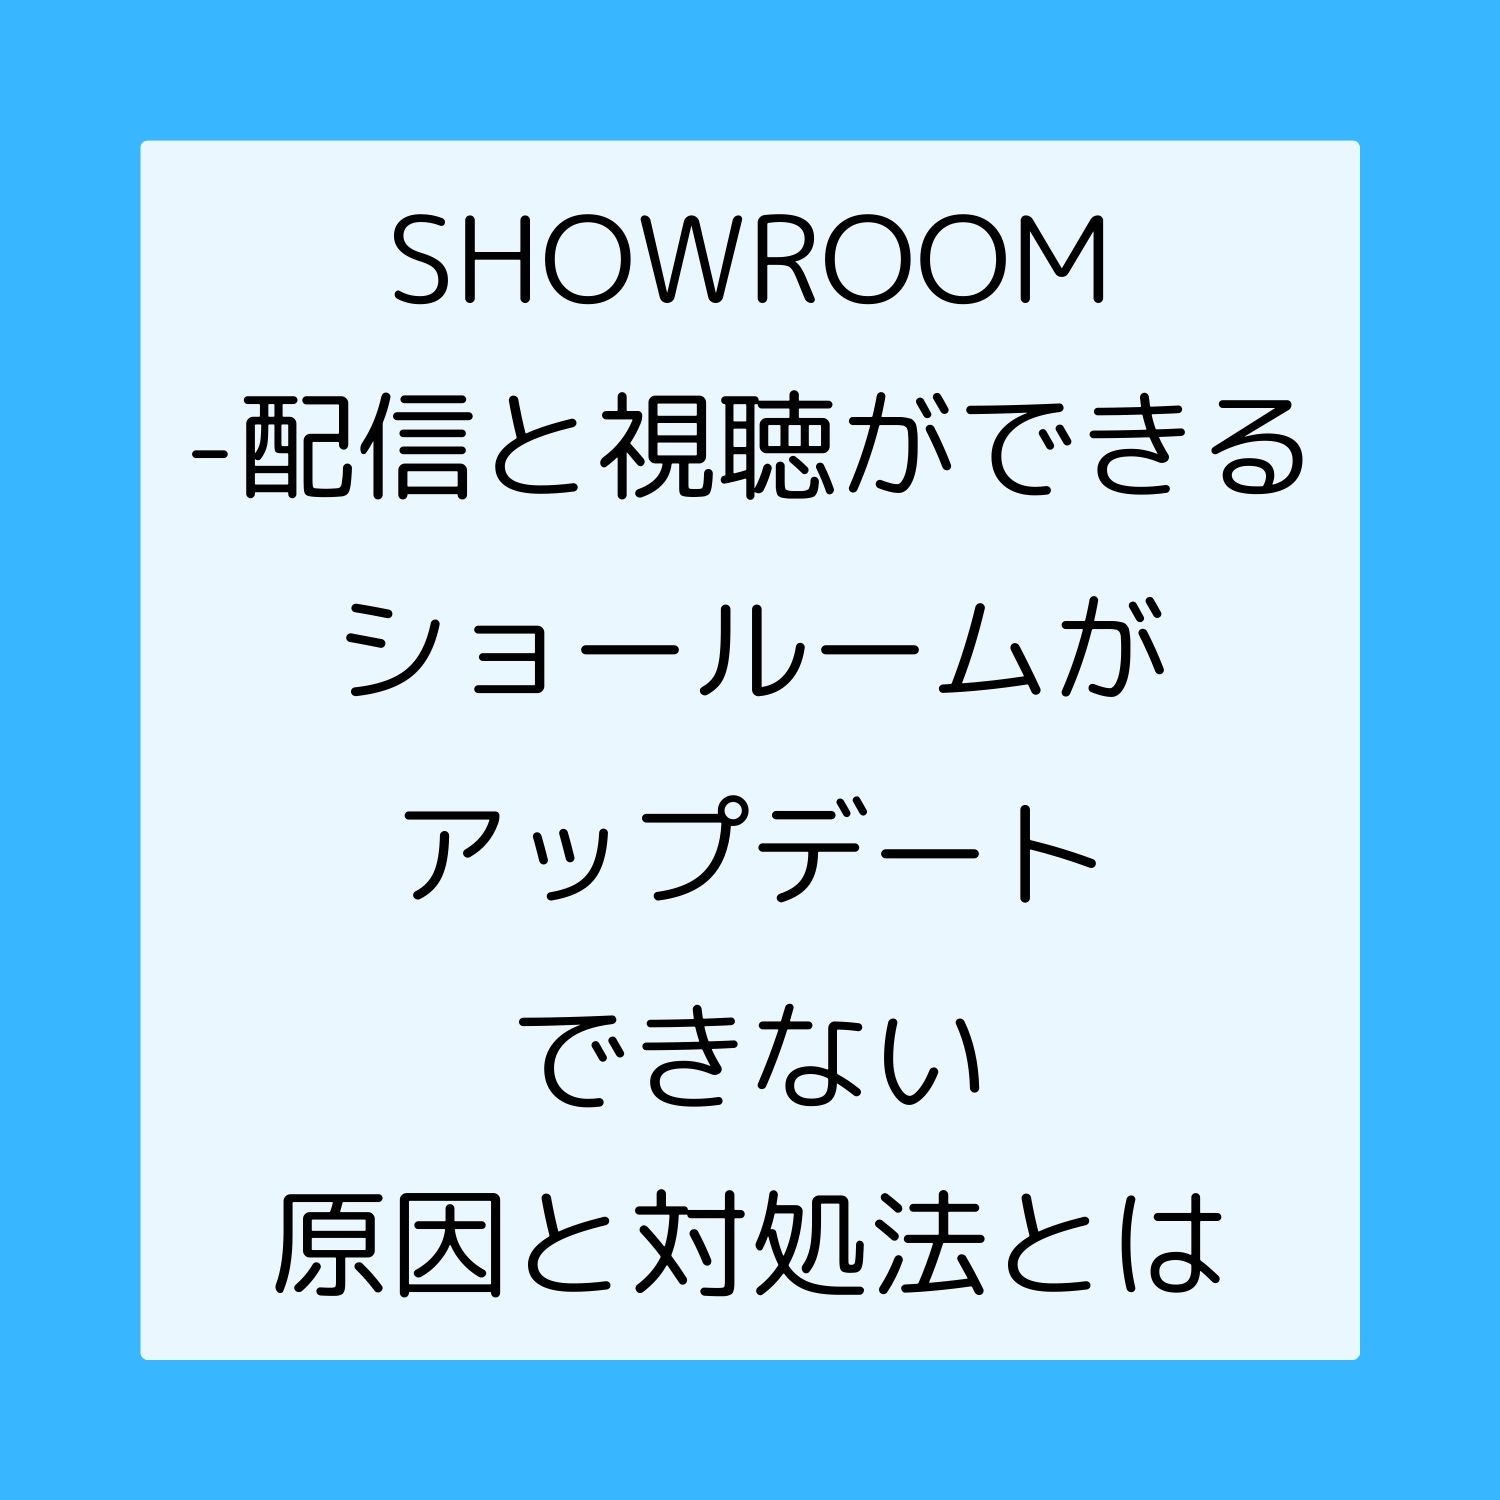 SHOWROOM - 配信と視聴ができるショールームがアップデートできない原因と対処法とは #SHOWROOM - 配信と視聴ができるショールーム